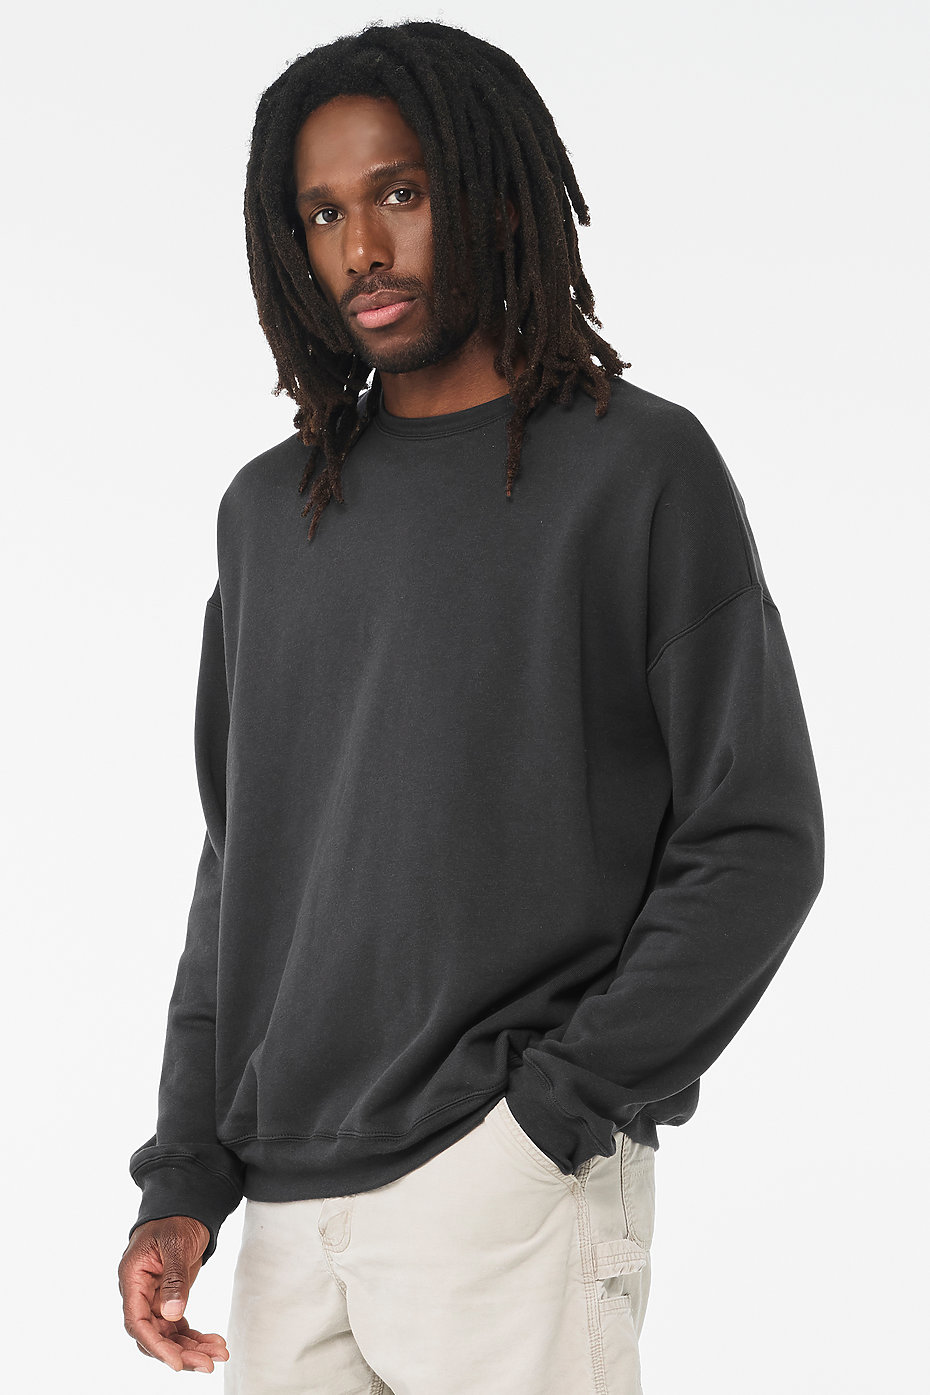 Sweatshirts For Men | Bulk Unisex Sweatshirts | Wholesale Crewneck ...